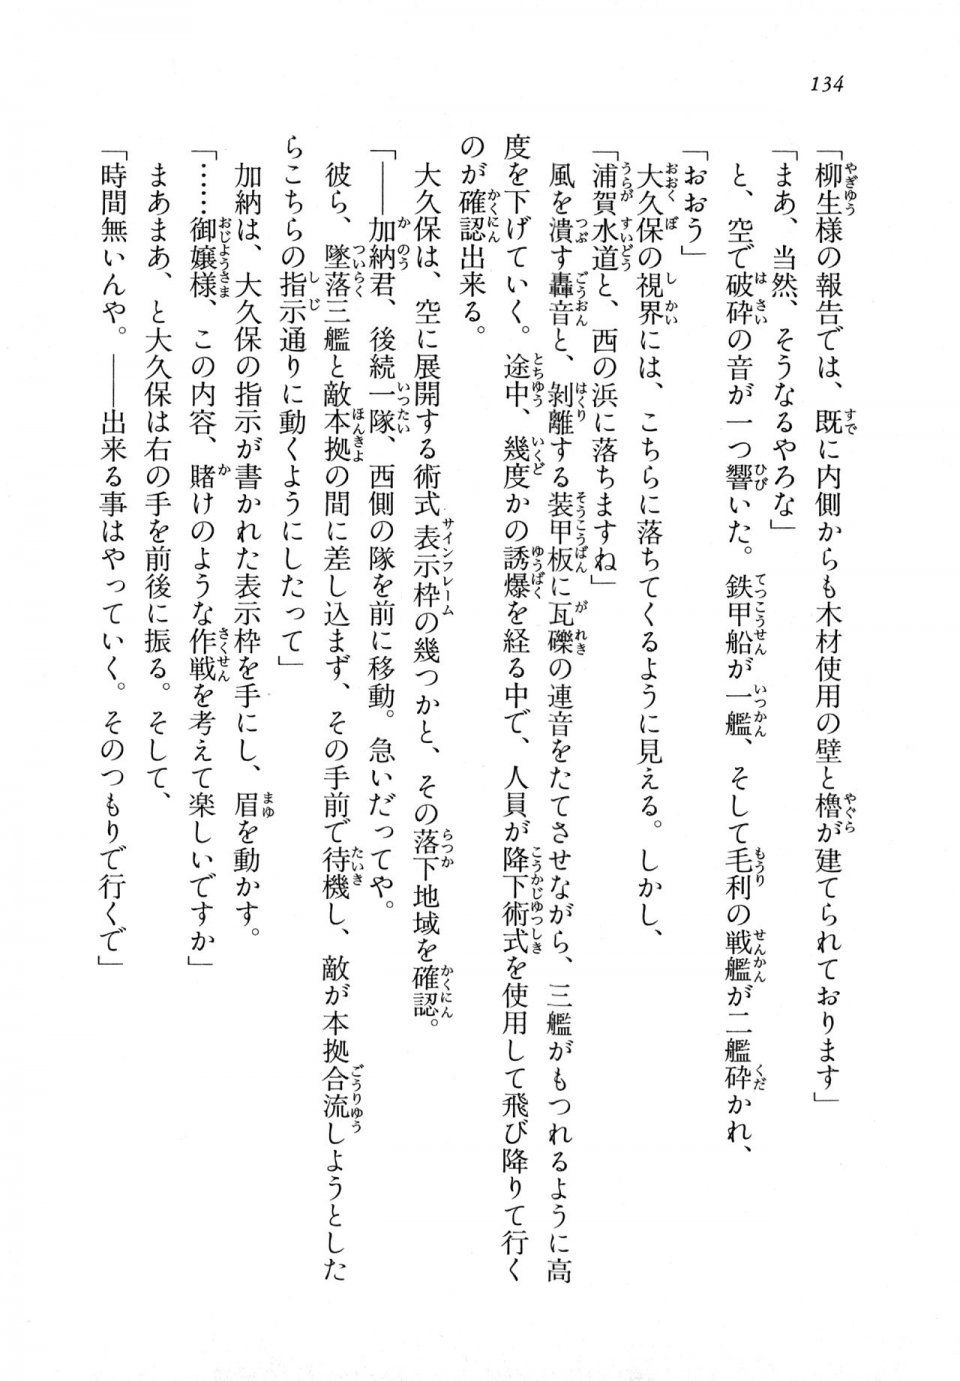 Kyoukai Senjou no Horizon LN Vol 18(7C) Part 1 - Photo #134